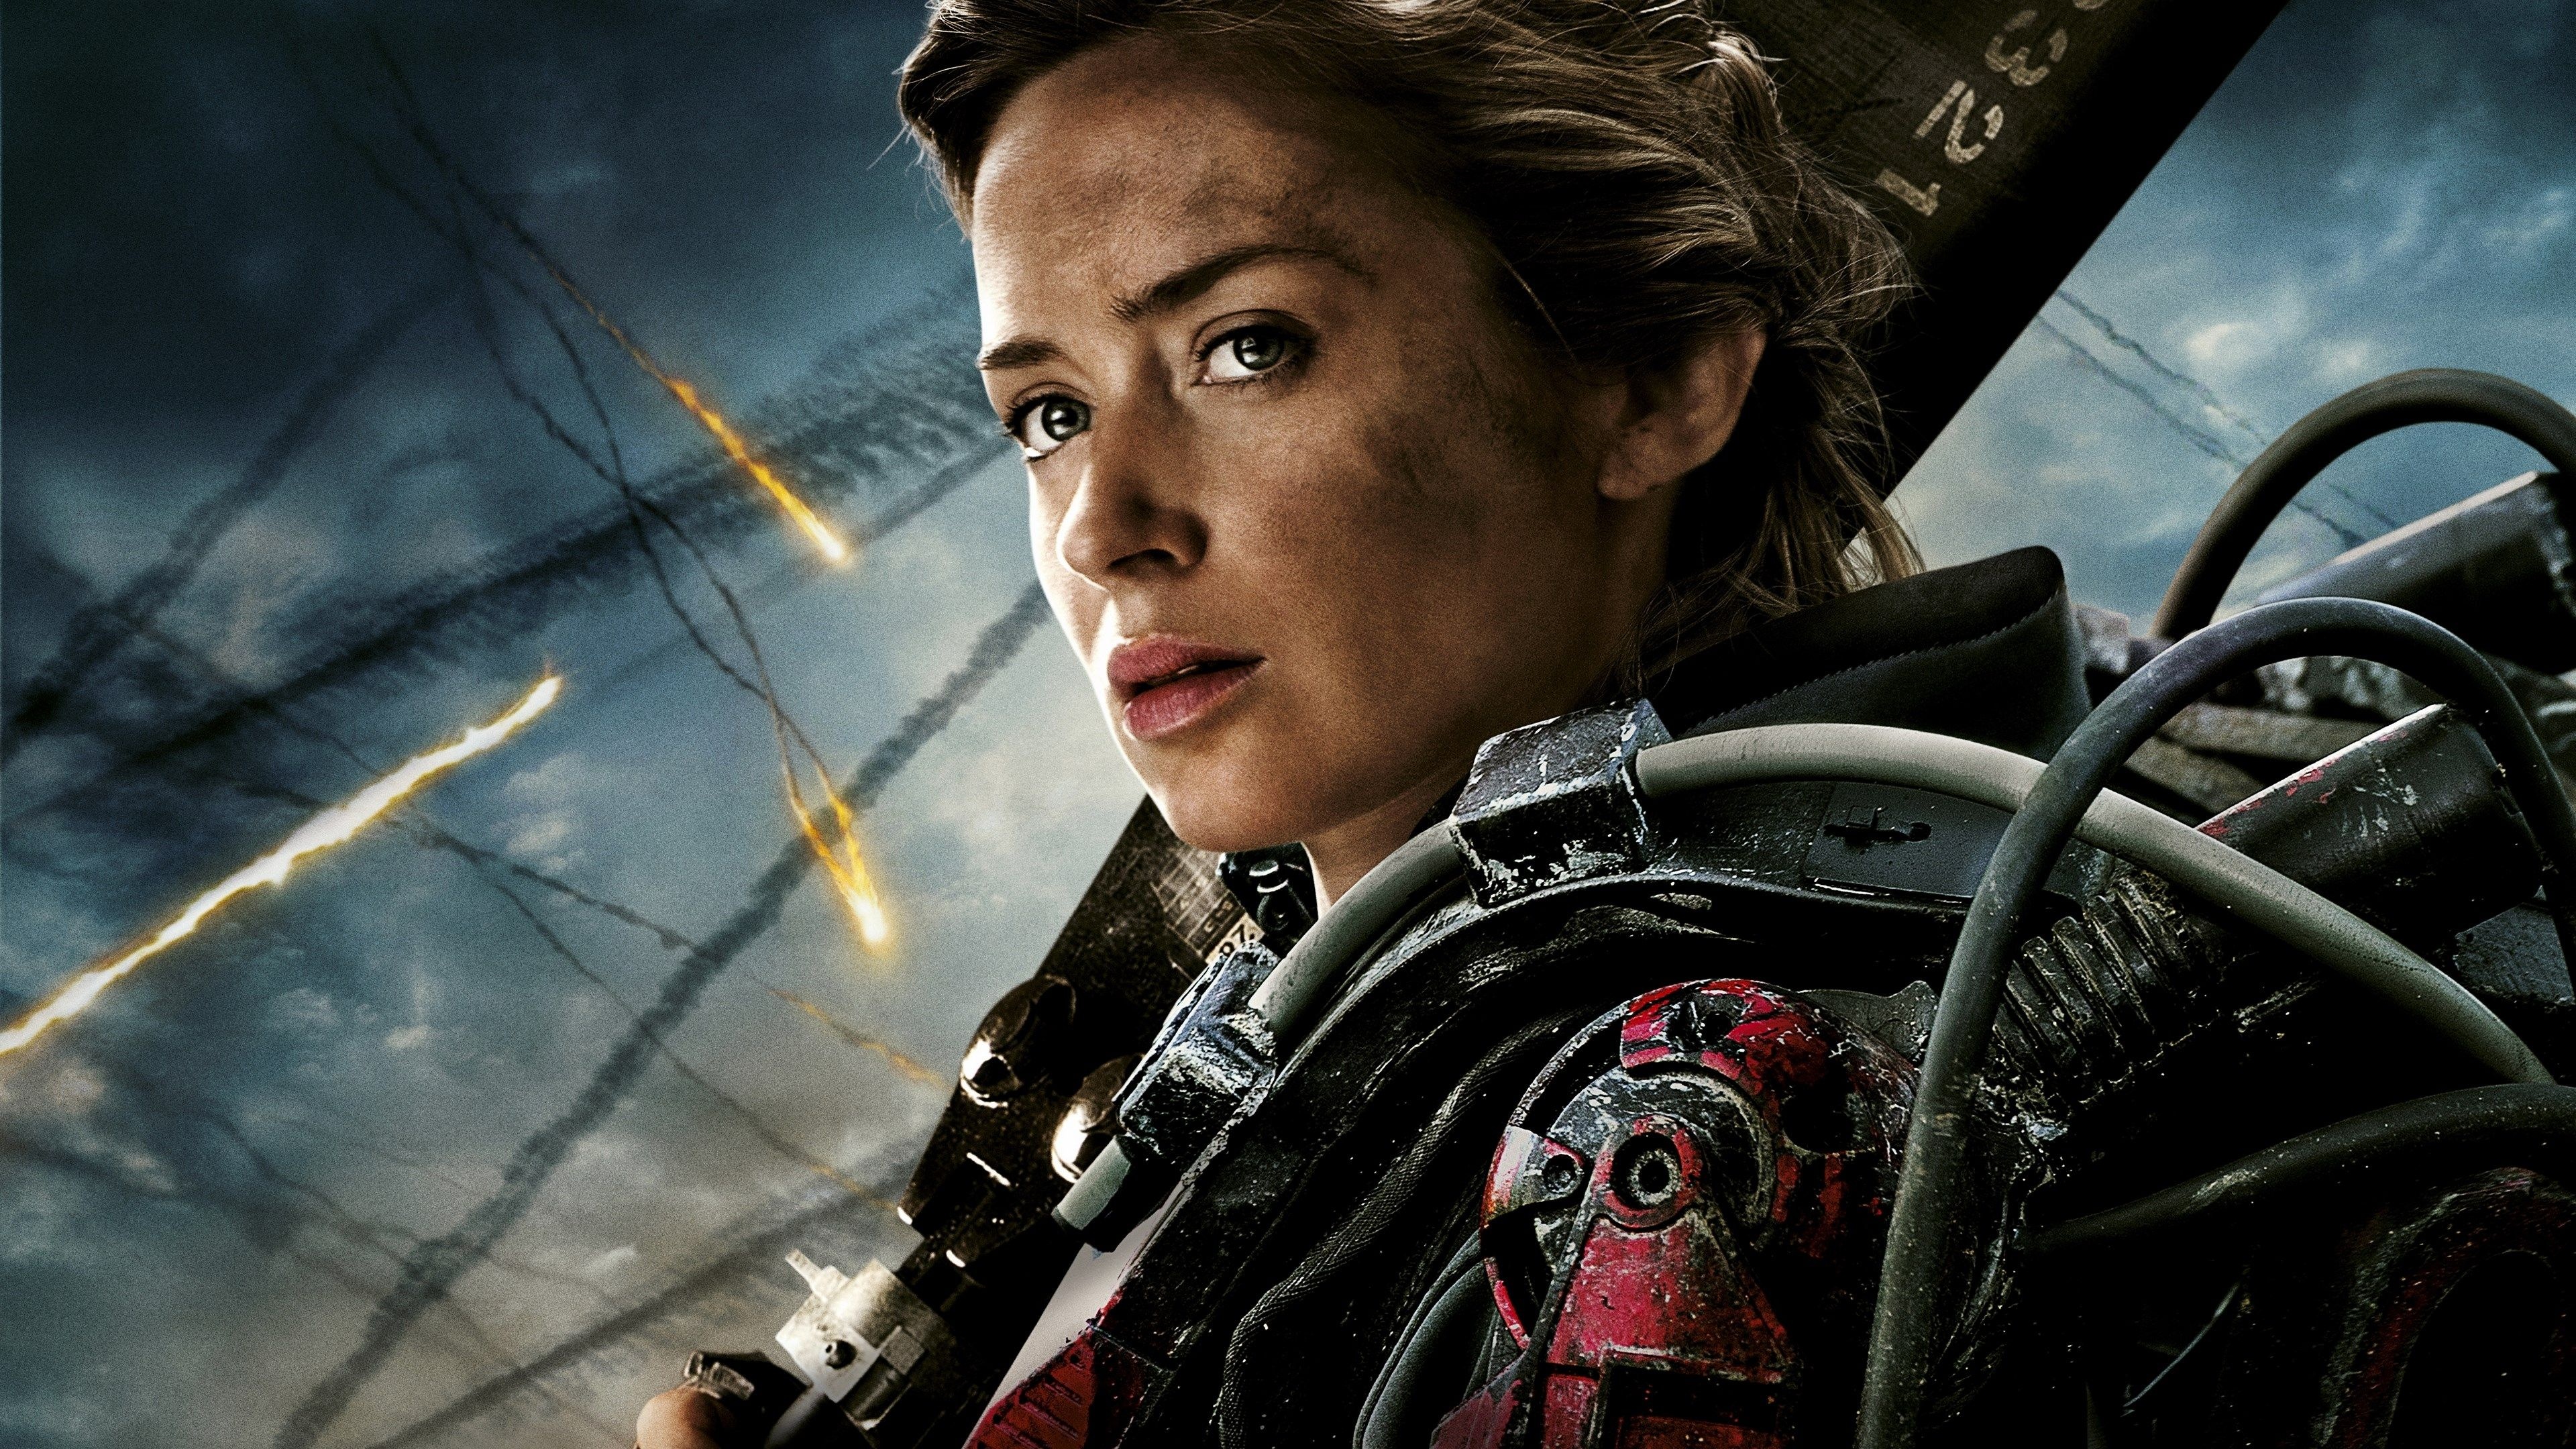 Emily Blunt: Played Rita Vrataski in a 2014 science fiction action film, Edge of Tomorrow. 3840x2160 4K Wallpaper.